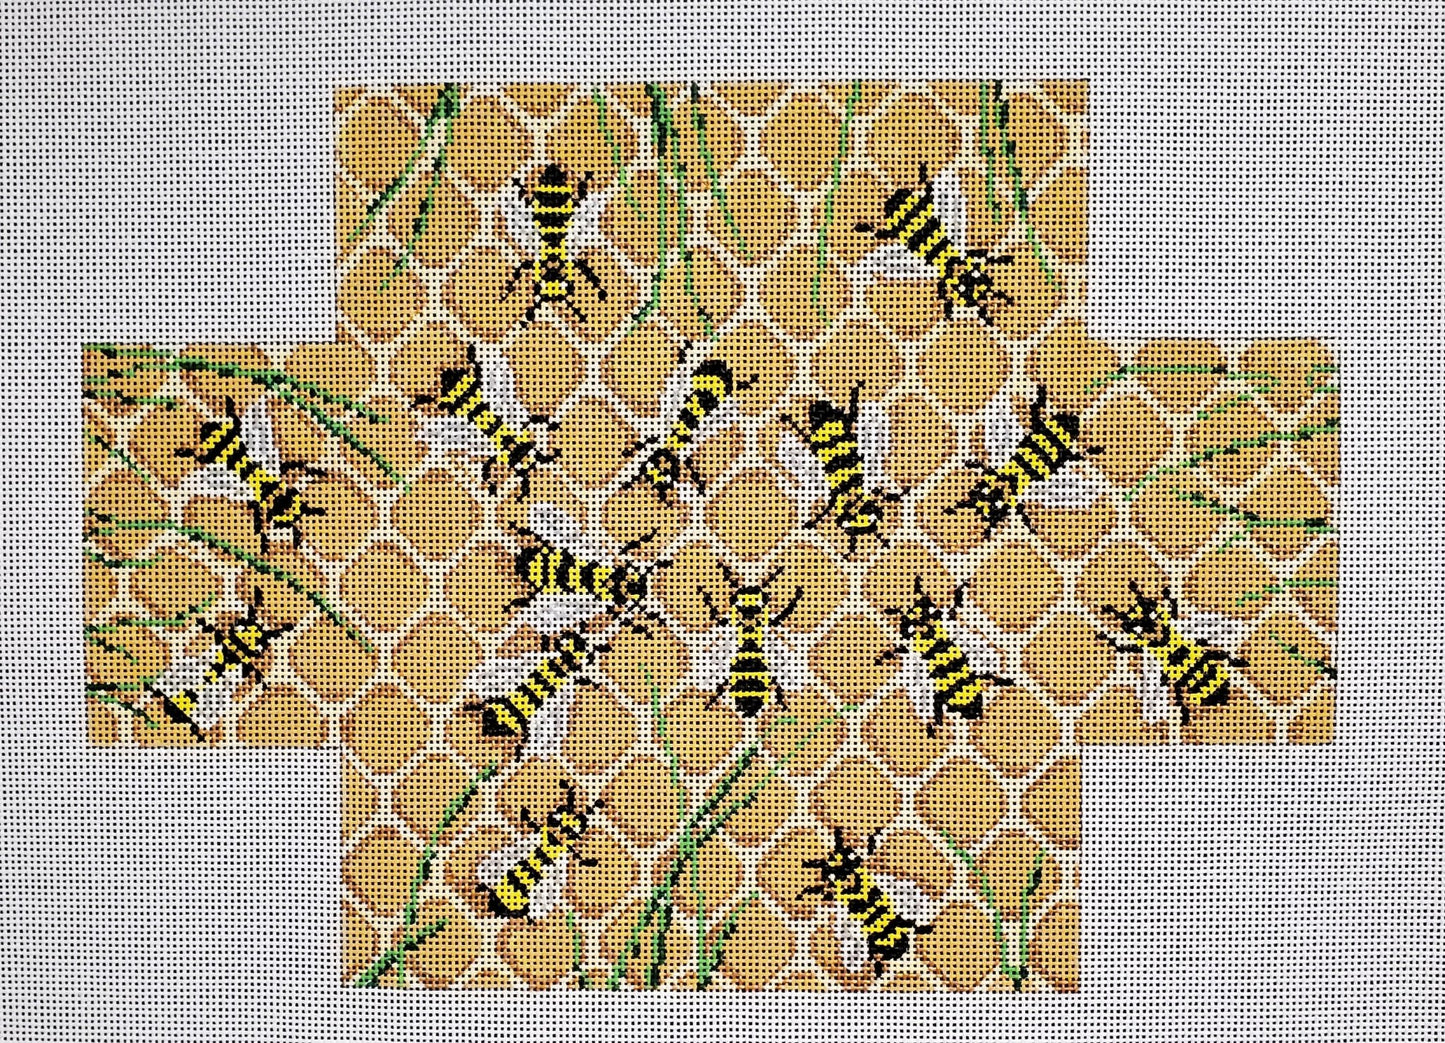 Honey Bees - The Flying Needles